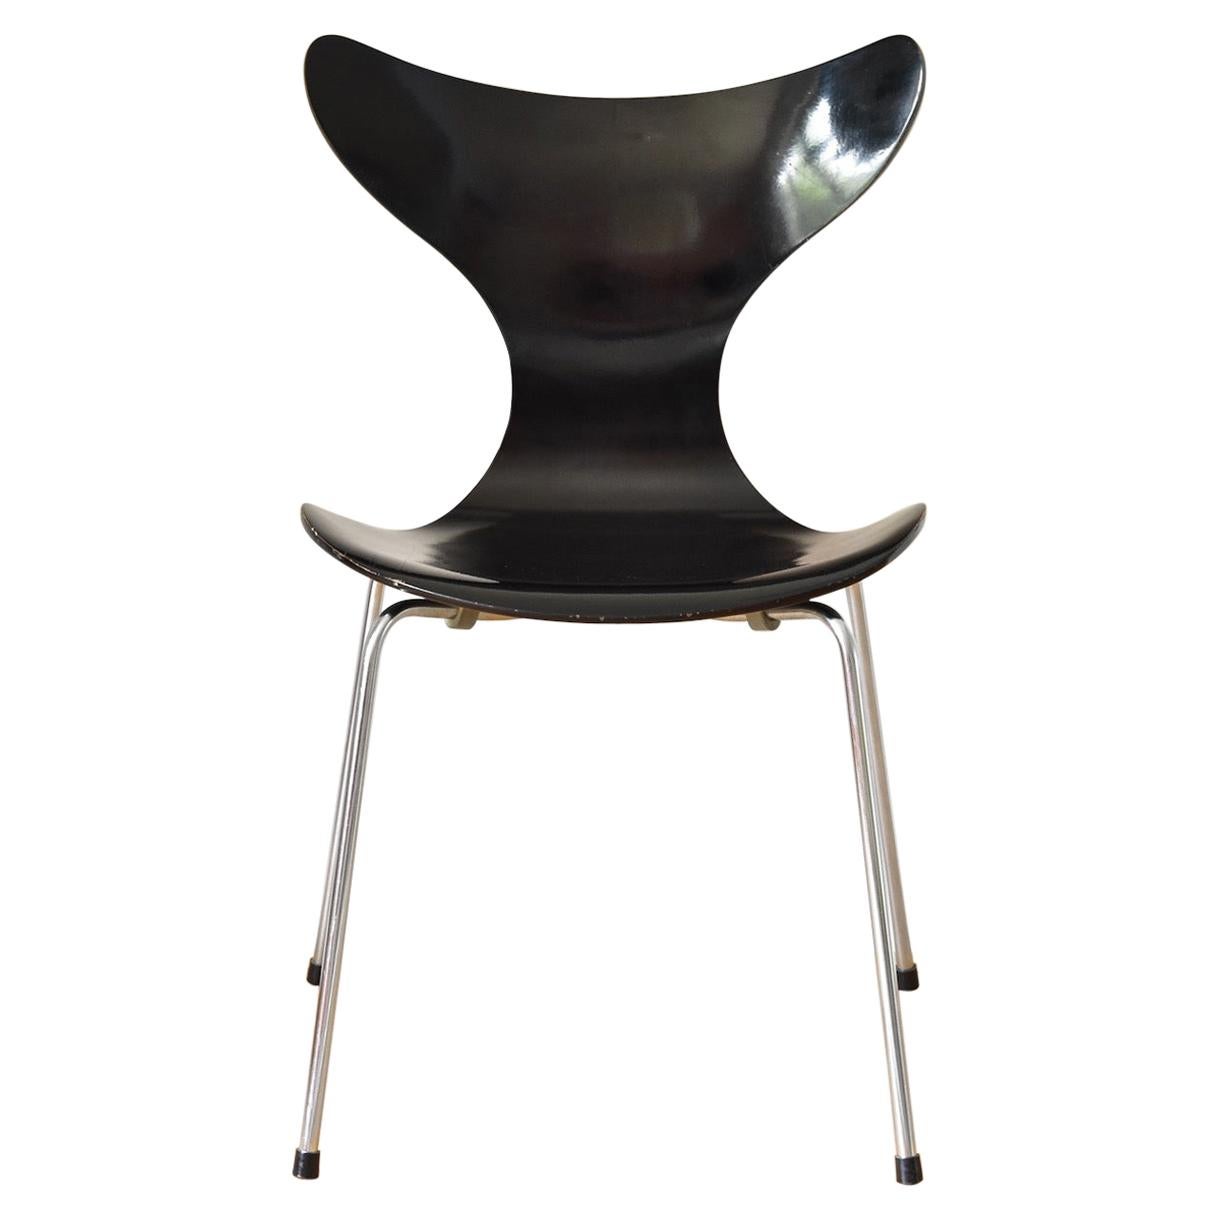 Seagull Chair Arne Jacobsen - 9 For Sale on 1stDibs | arne jacobsen stol  seagull pris, arne jacobsen seagull chair, arne jacobsen seagull